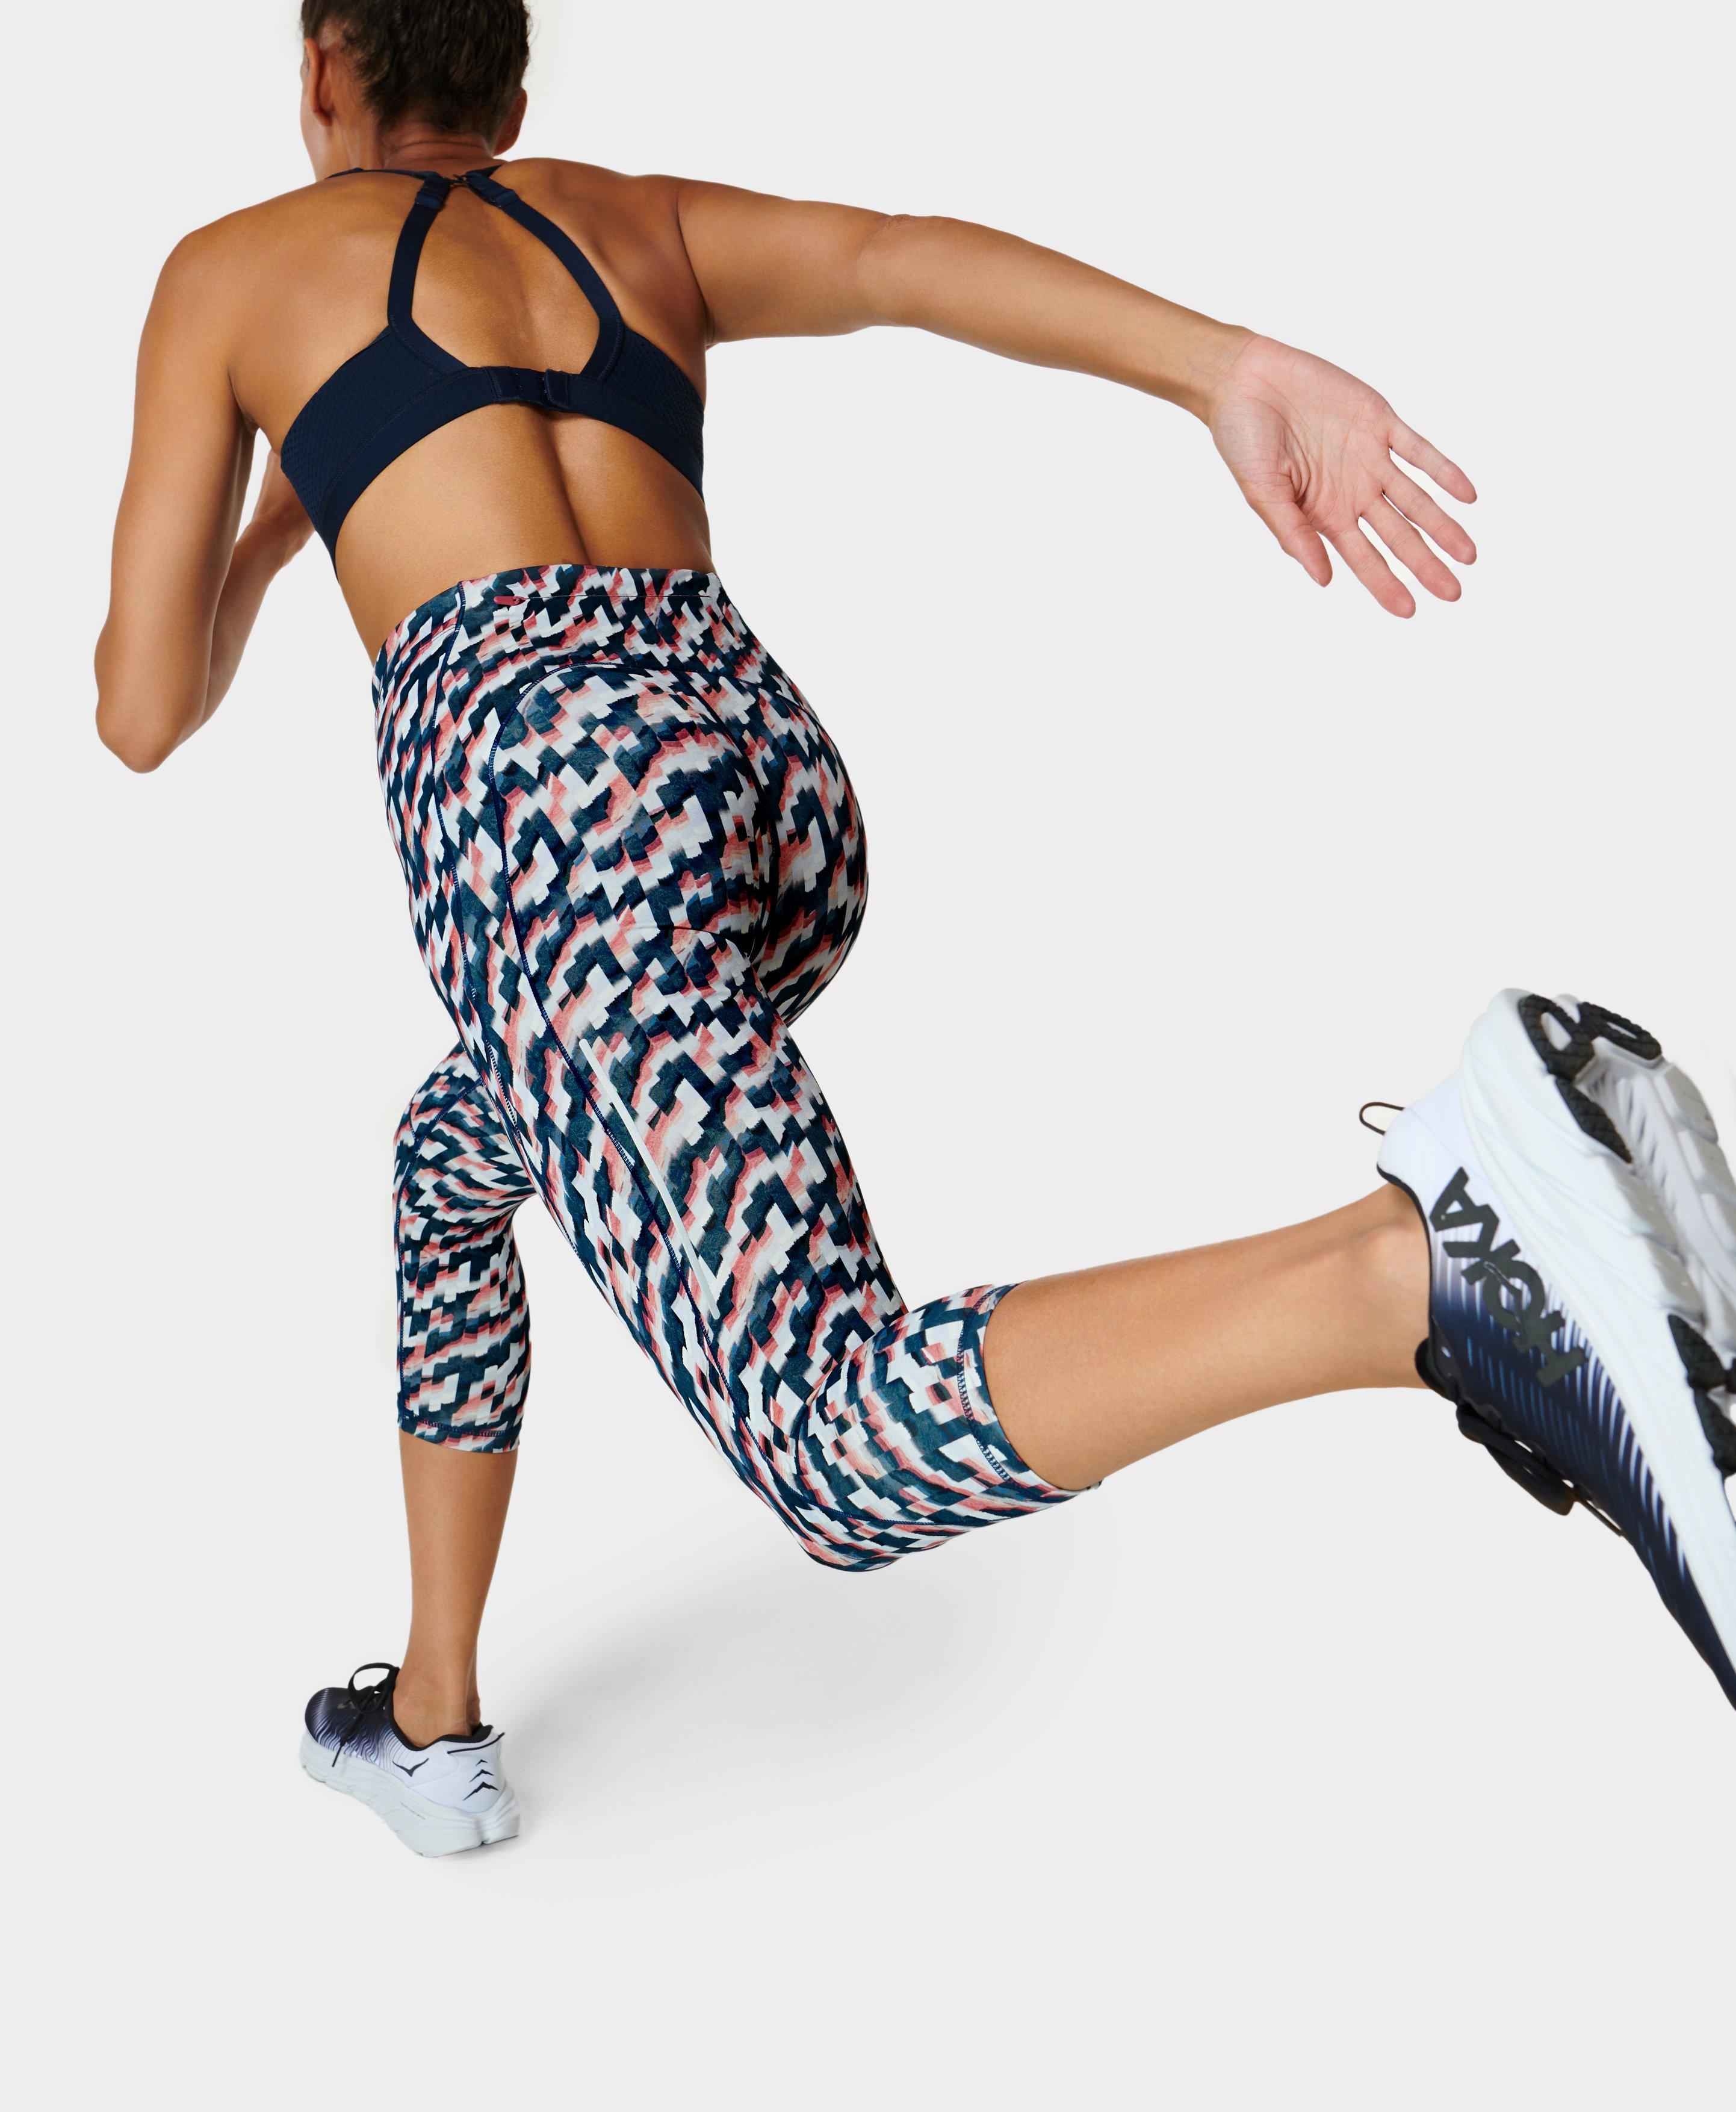 Sweaty Betty Rapid Run Cropped Leggings, Multi Colored, Women's